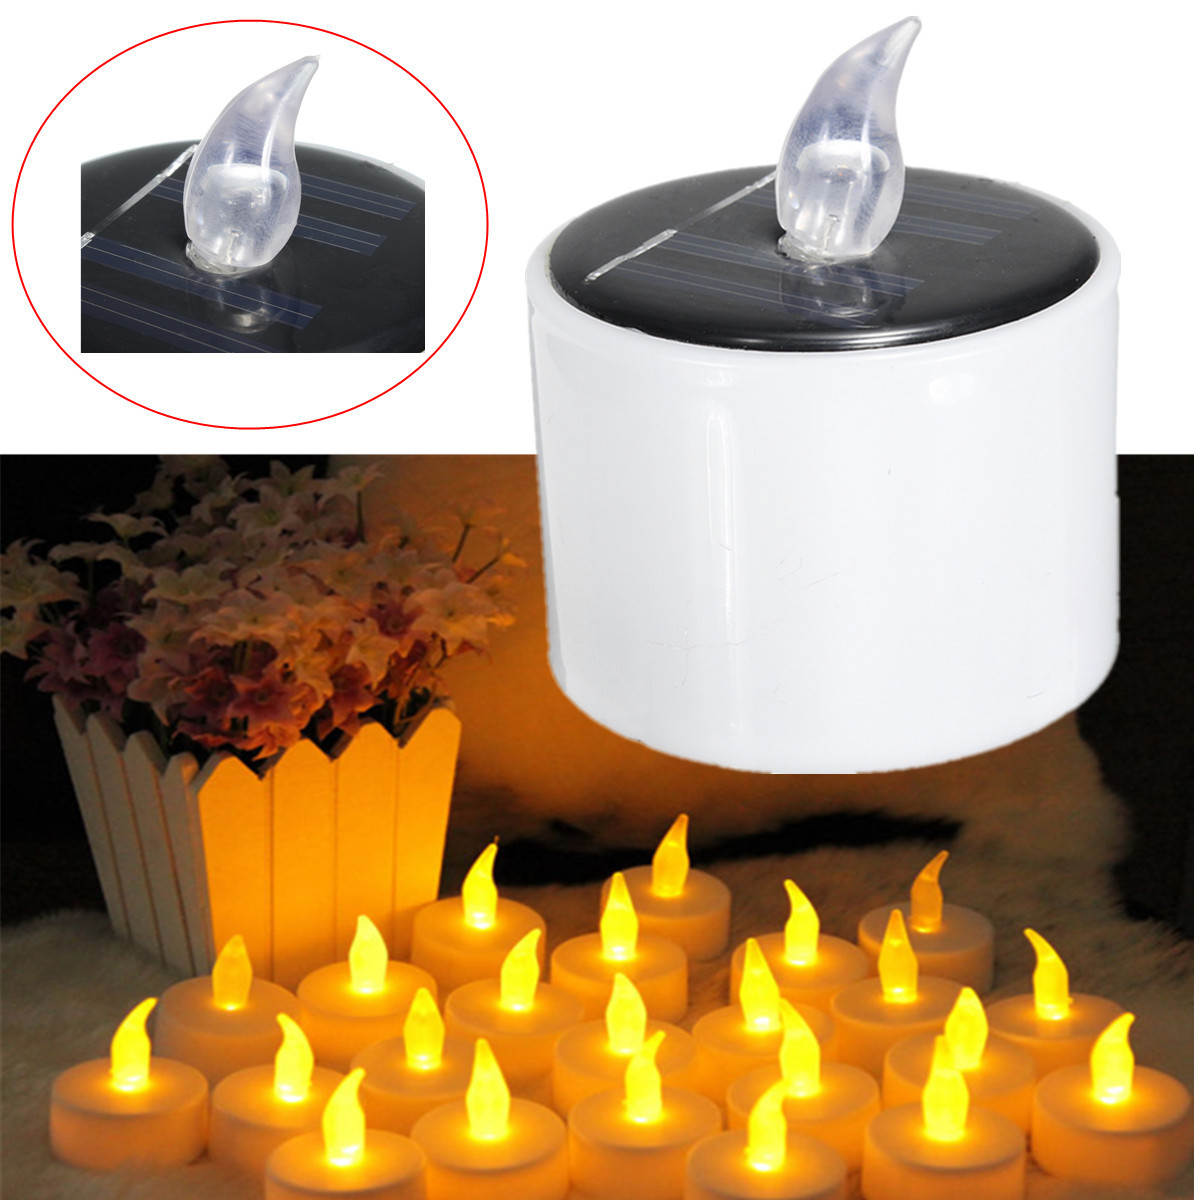 Solar-Powered-LED-Candle-Battery-Wedding-Decor-Romantic-Warm-White-Tea-Light-1094504